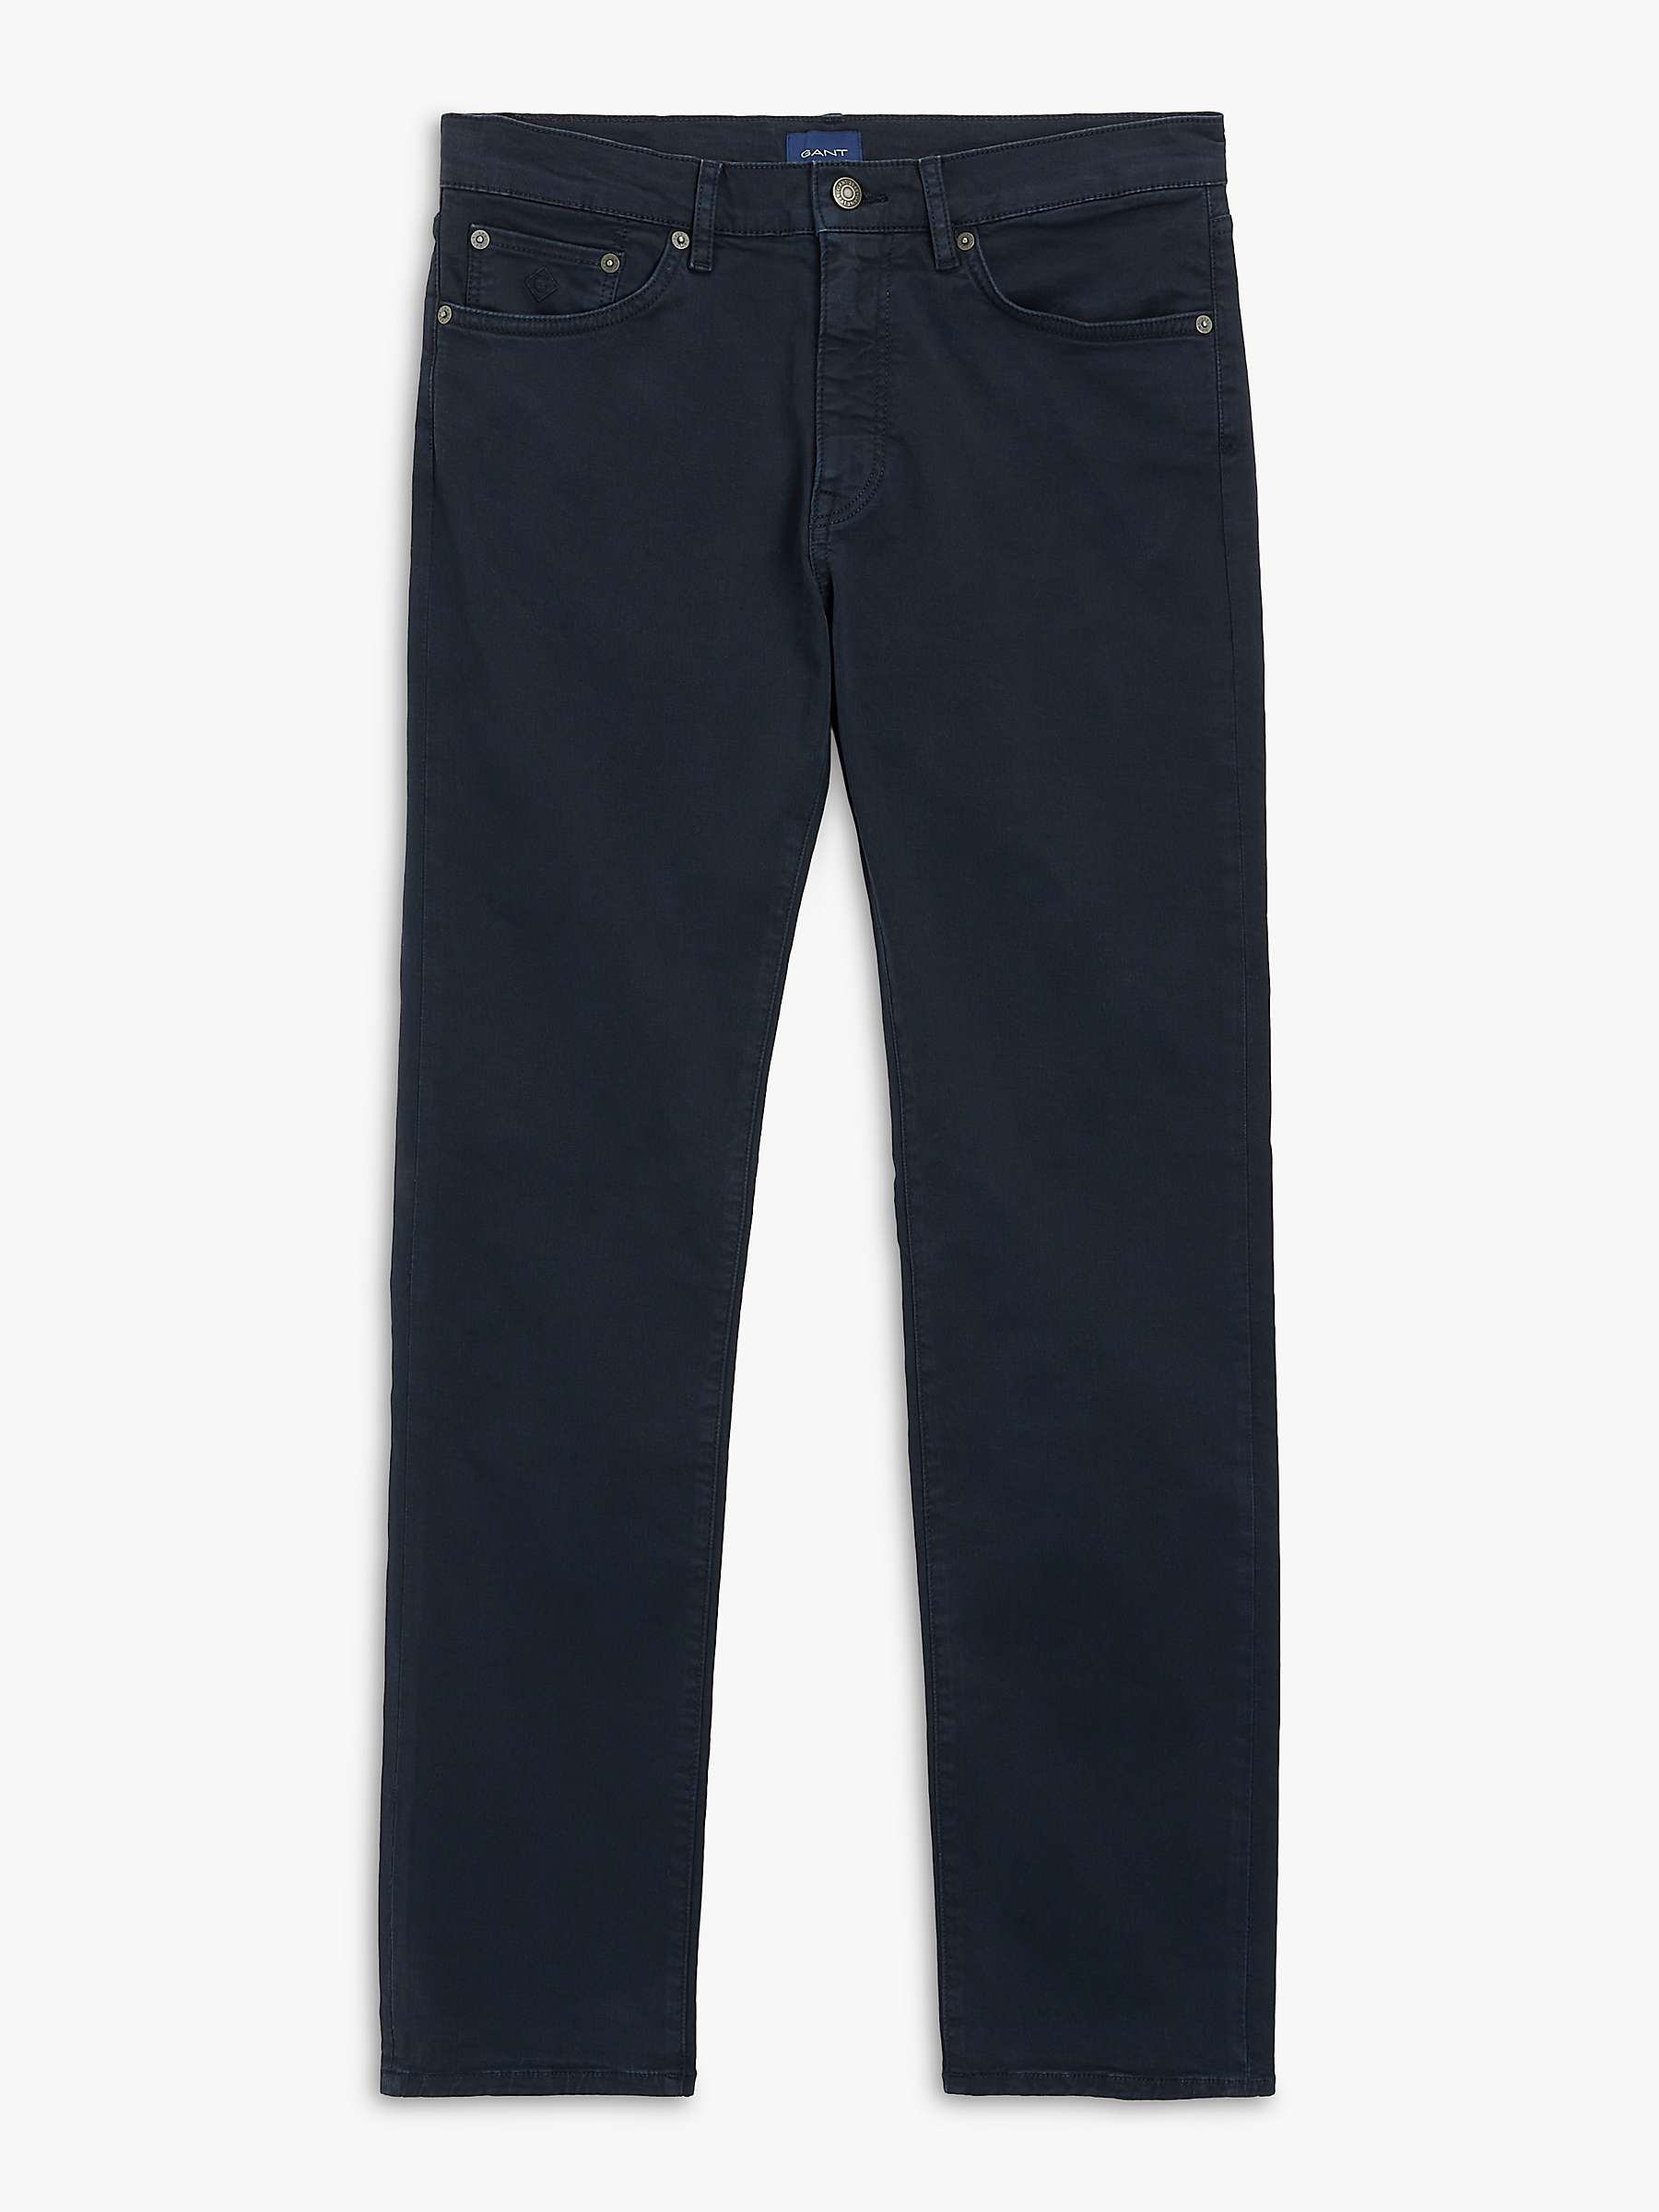 GANT Arley Regular Straight Fit Jeans, Navy 405 at John Lewis & Partners